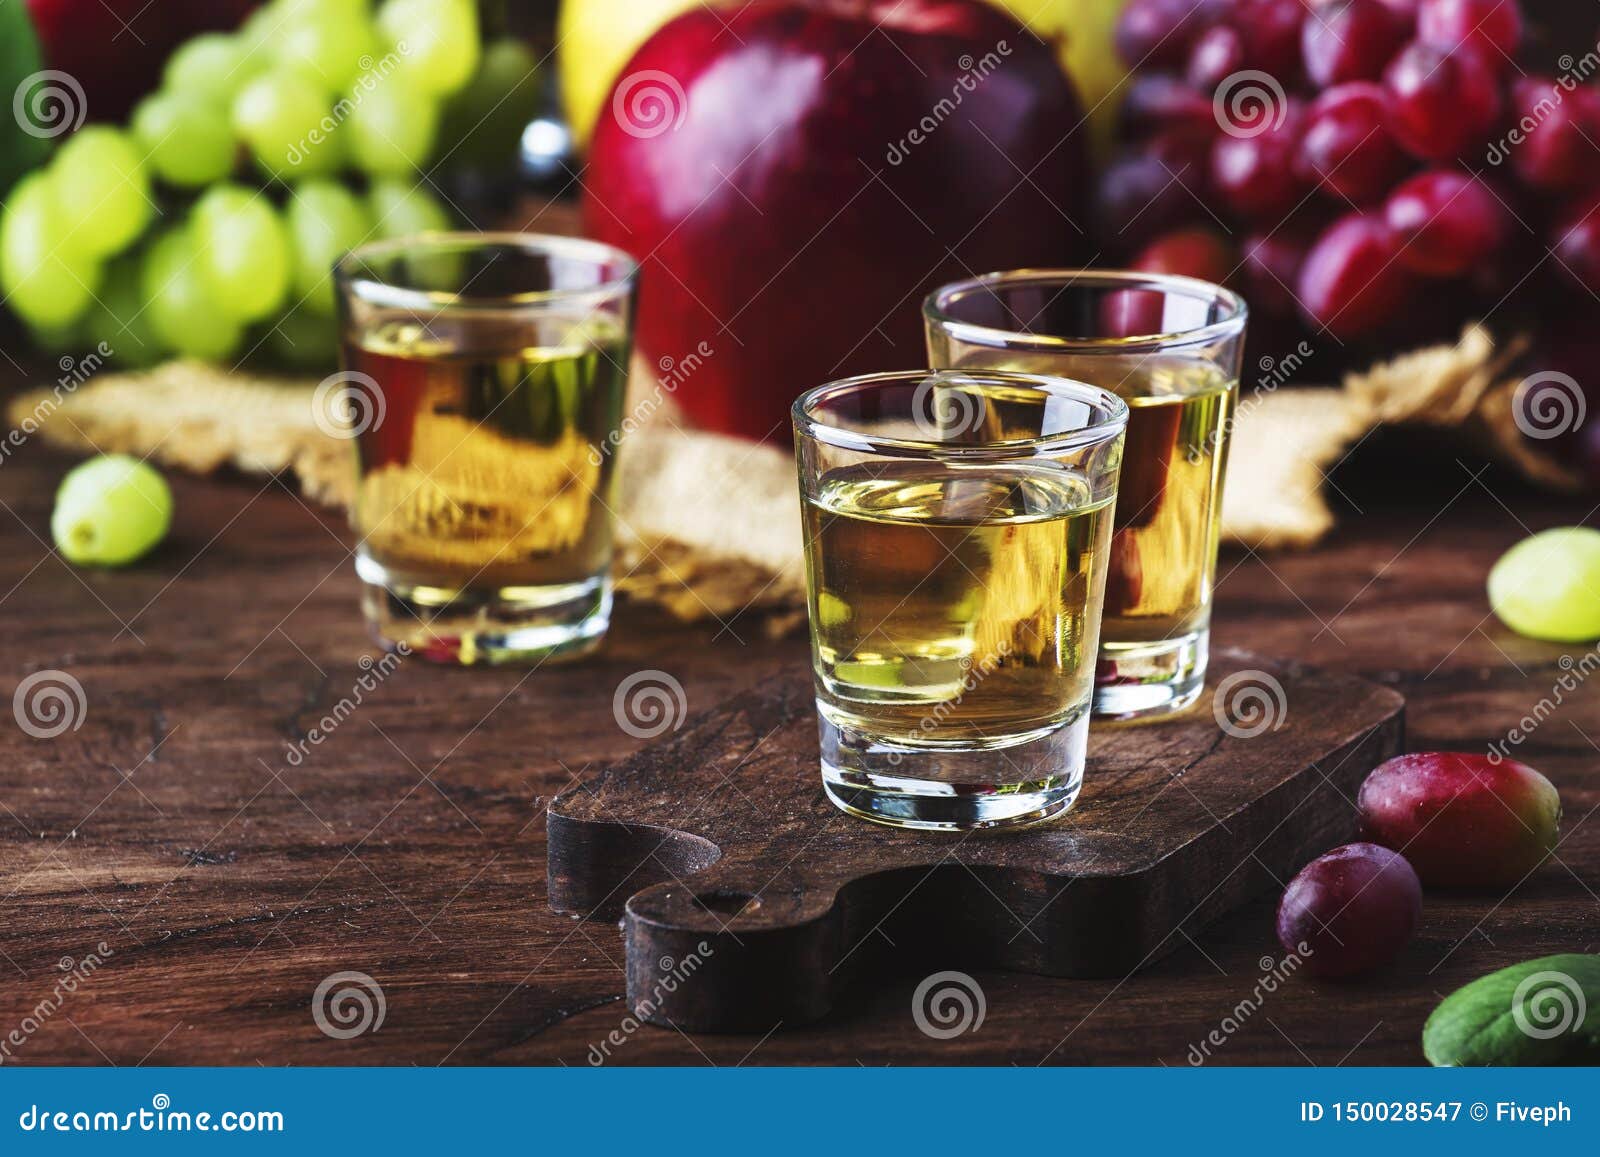 Rakija, Raki or Rakia - Balkan Strong Alcoholic Drink Brandy Type Based on  Fermented Fruits, Vintage Wooden Table, Still Life in Stock Image - Image  of metaxa, raki: 150028547